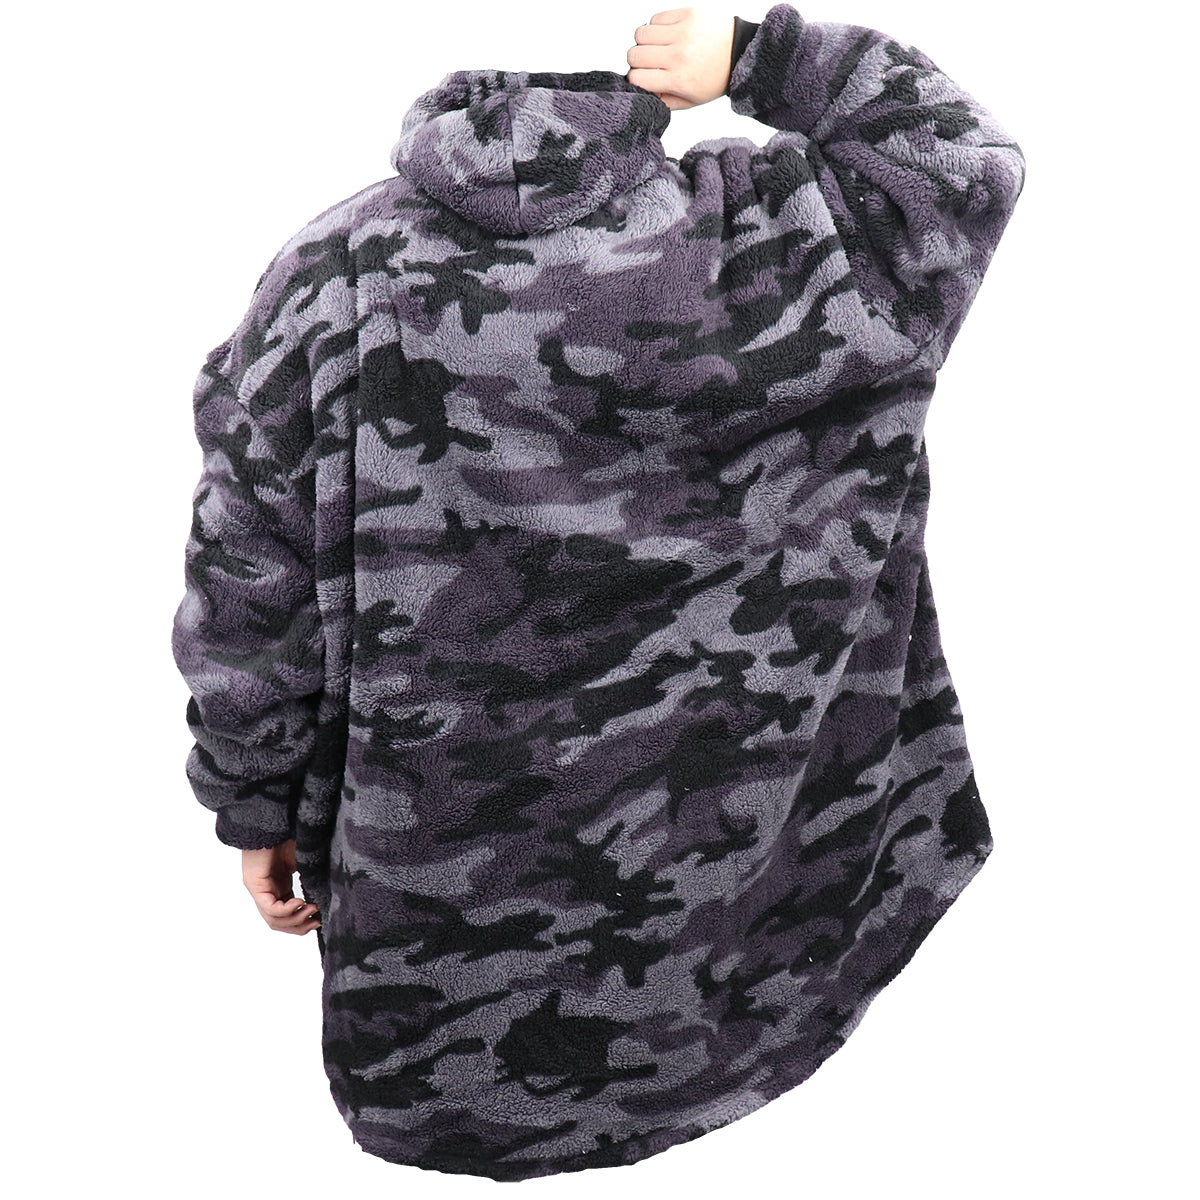 Oversized Soft Pullover Plain Hoodie Warm Fleece Blanket Plush Winter Sweatshirt, Hot Pink, Adult